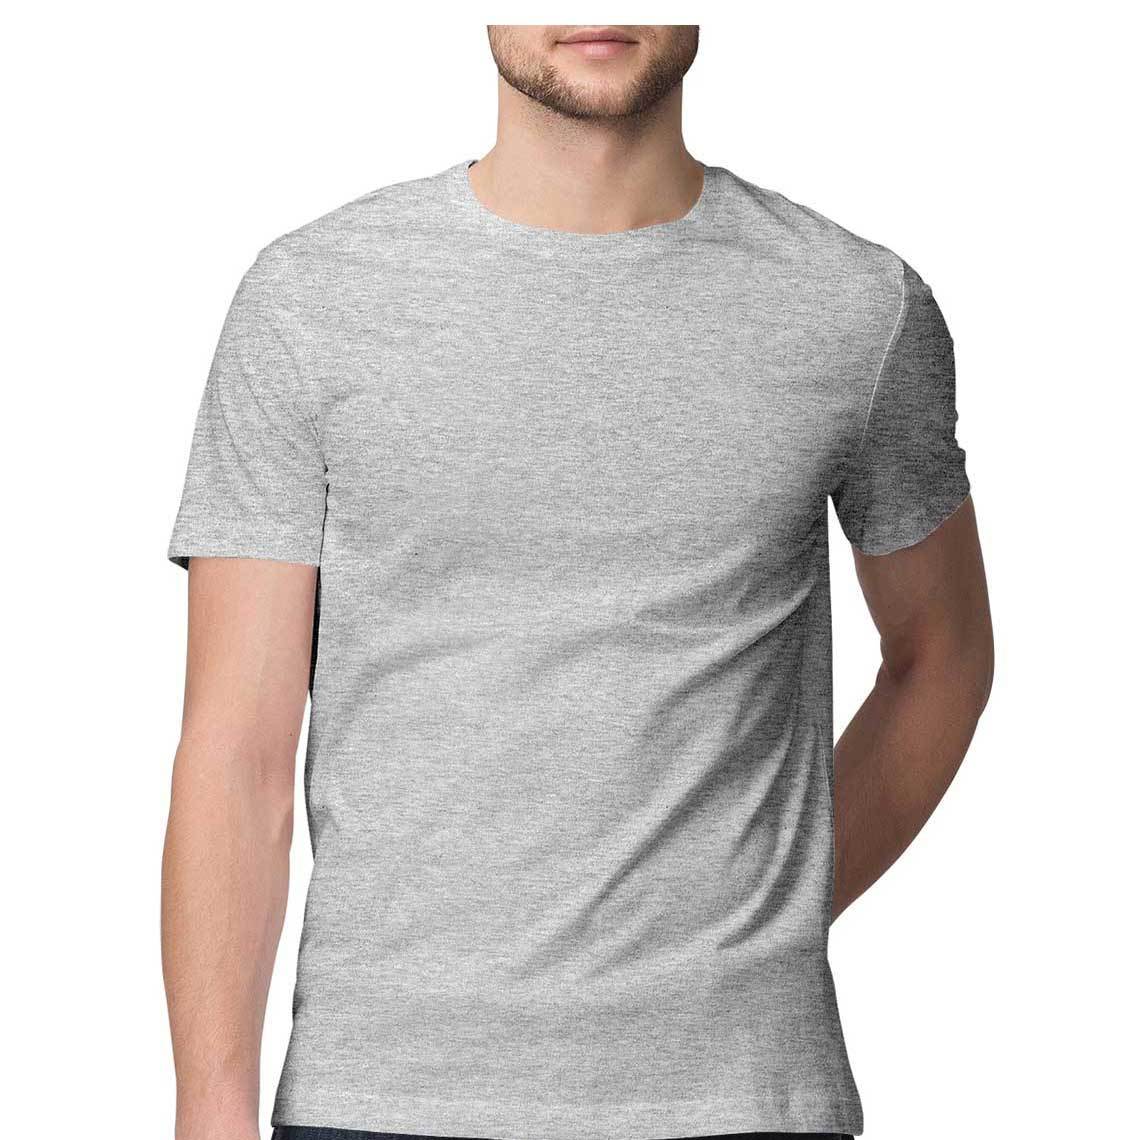 Men's Round Neck T-shirt | Print on Demand Dropshipping | Printrove